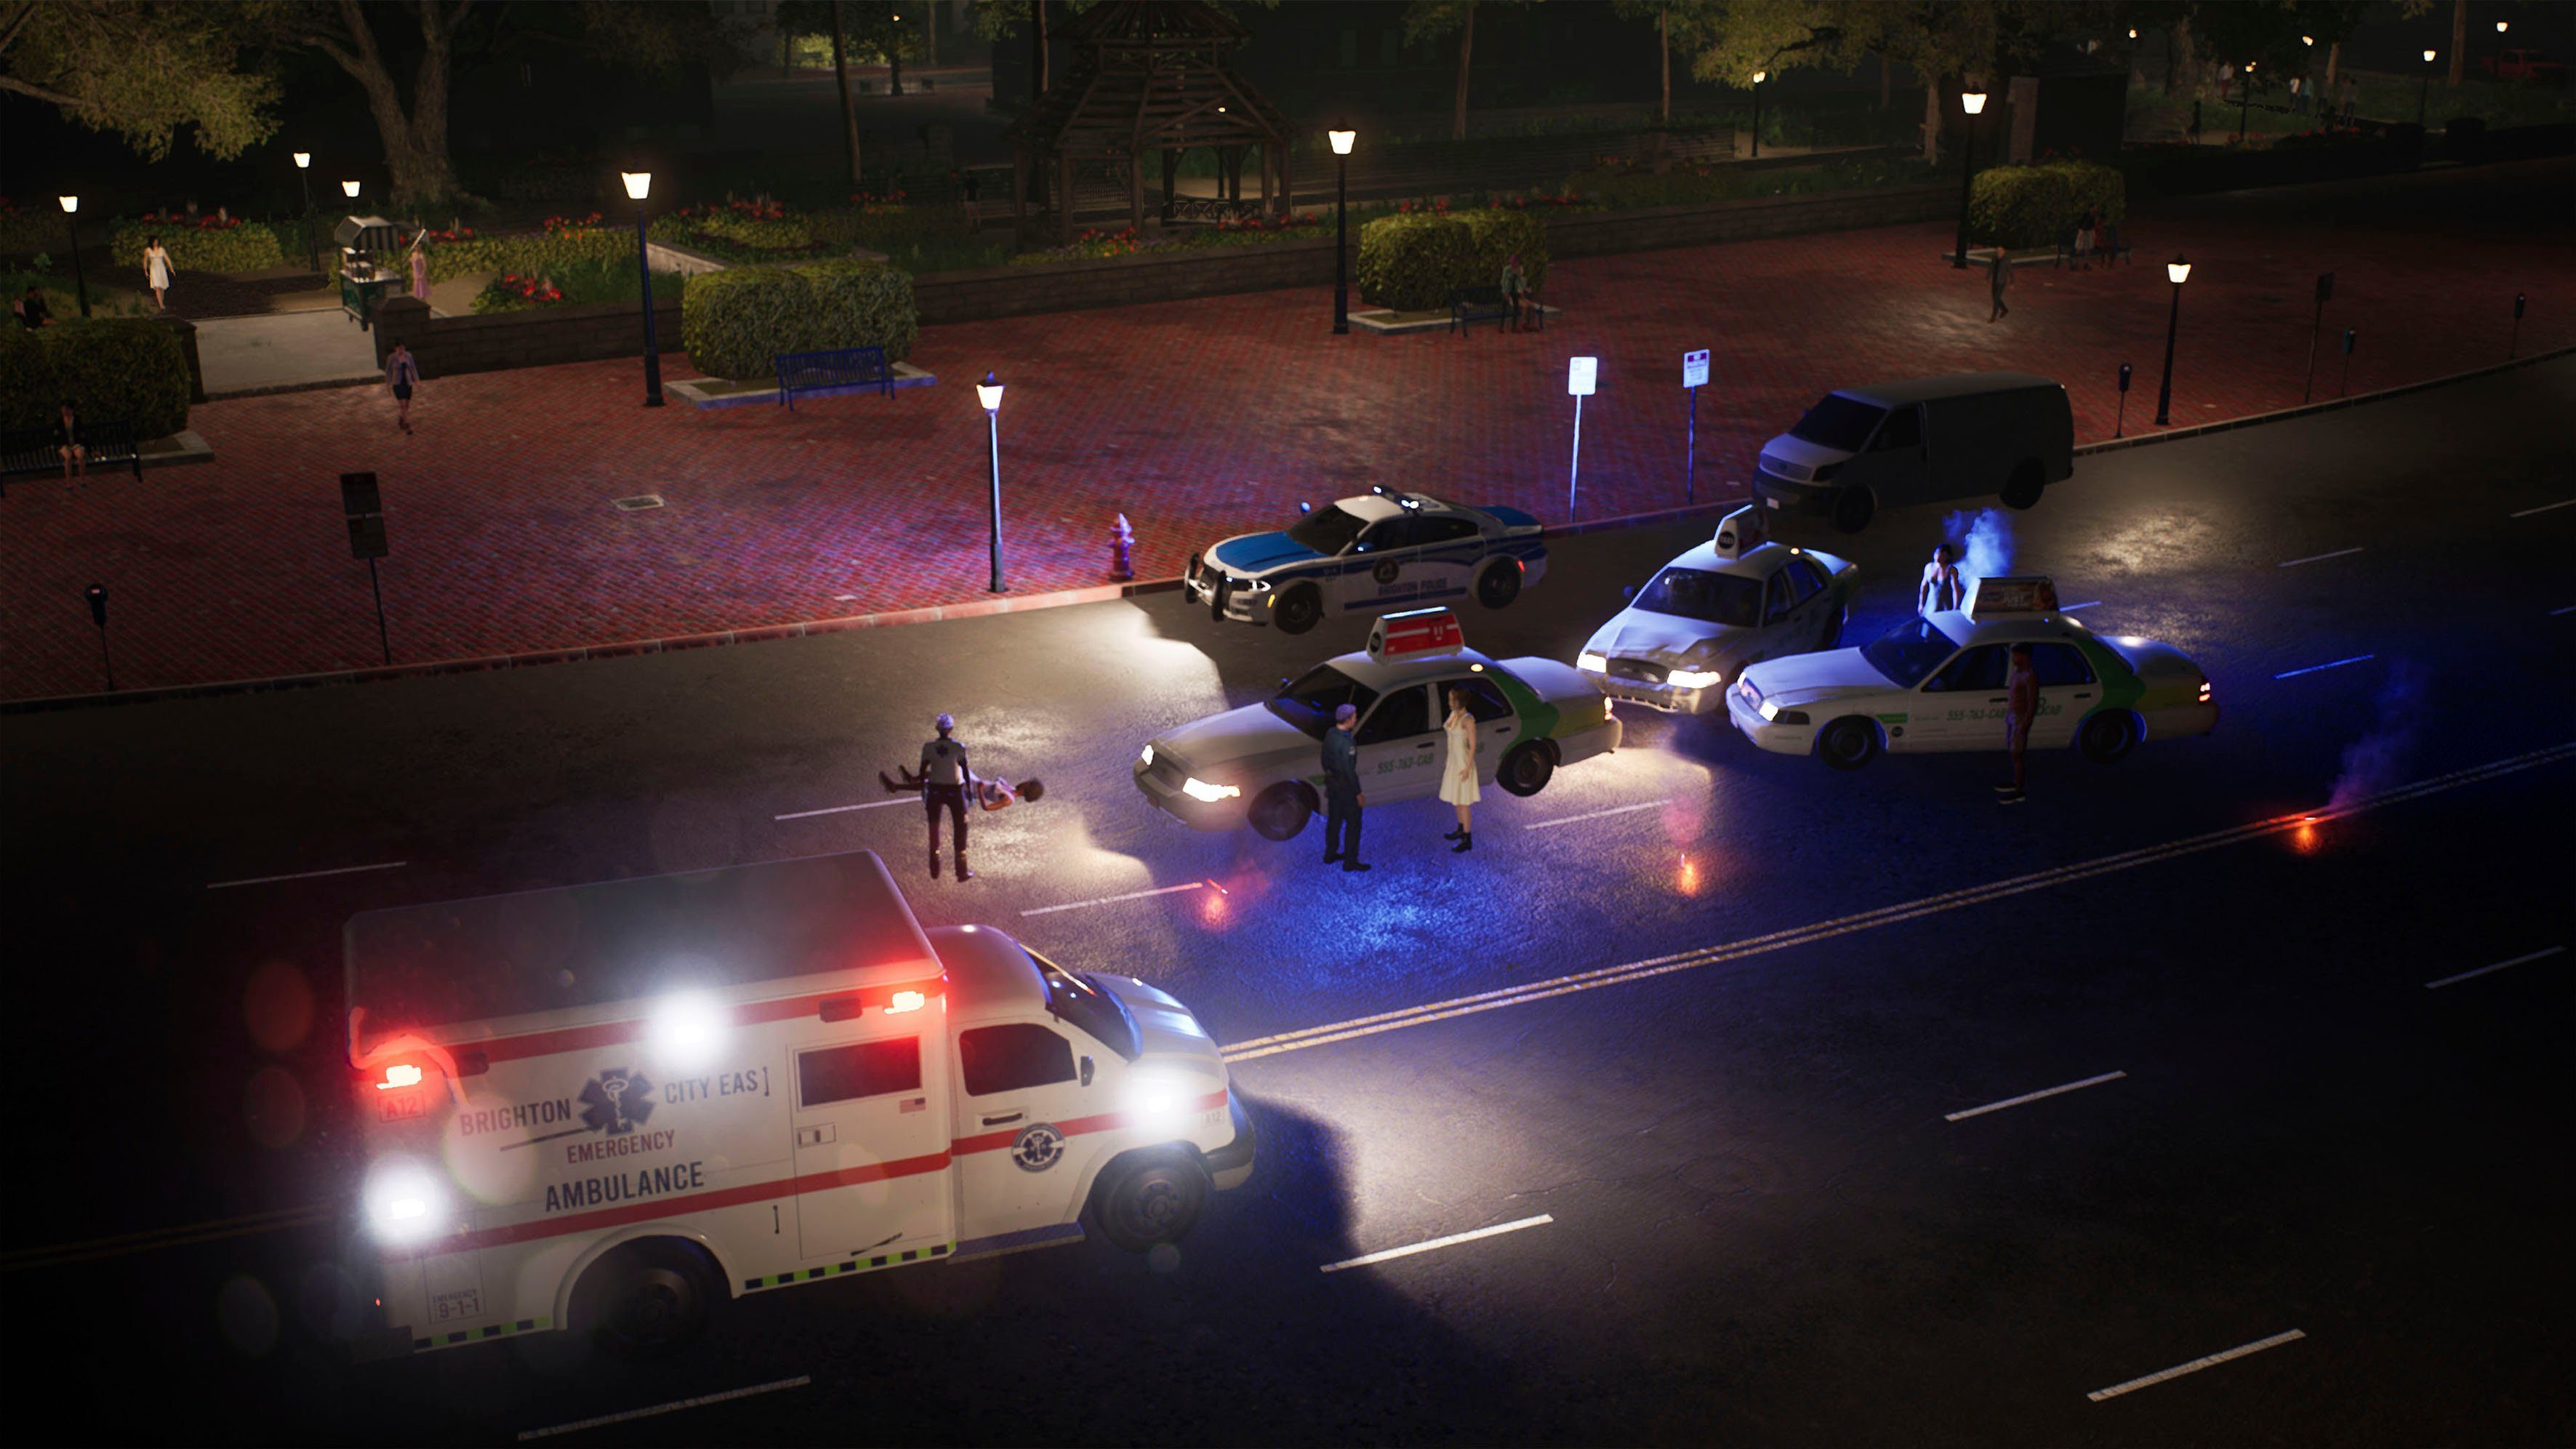 Patrol 5 Astragon PlayStation Officers Simulator: Police